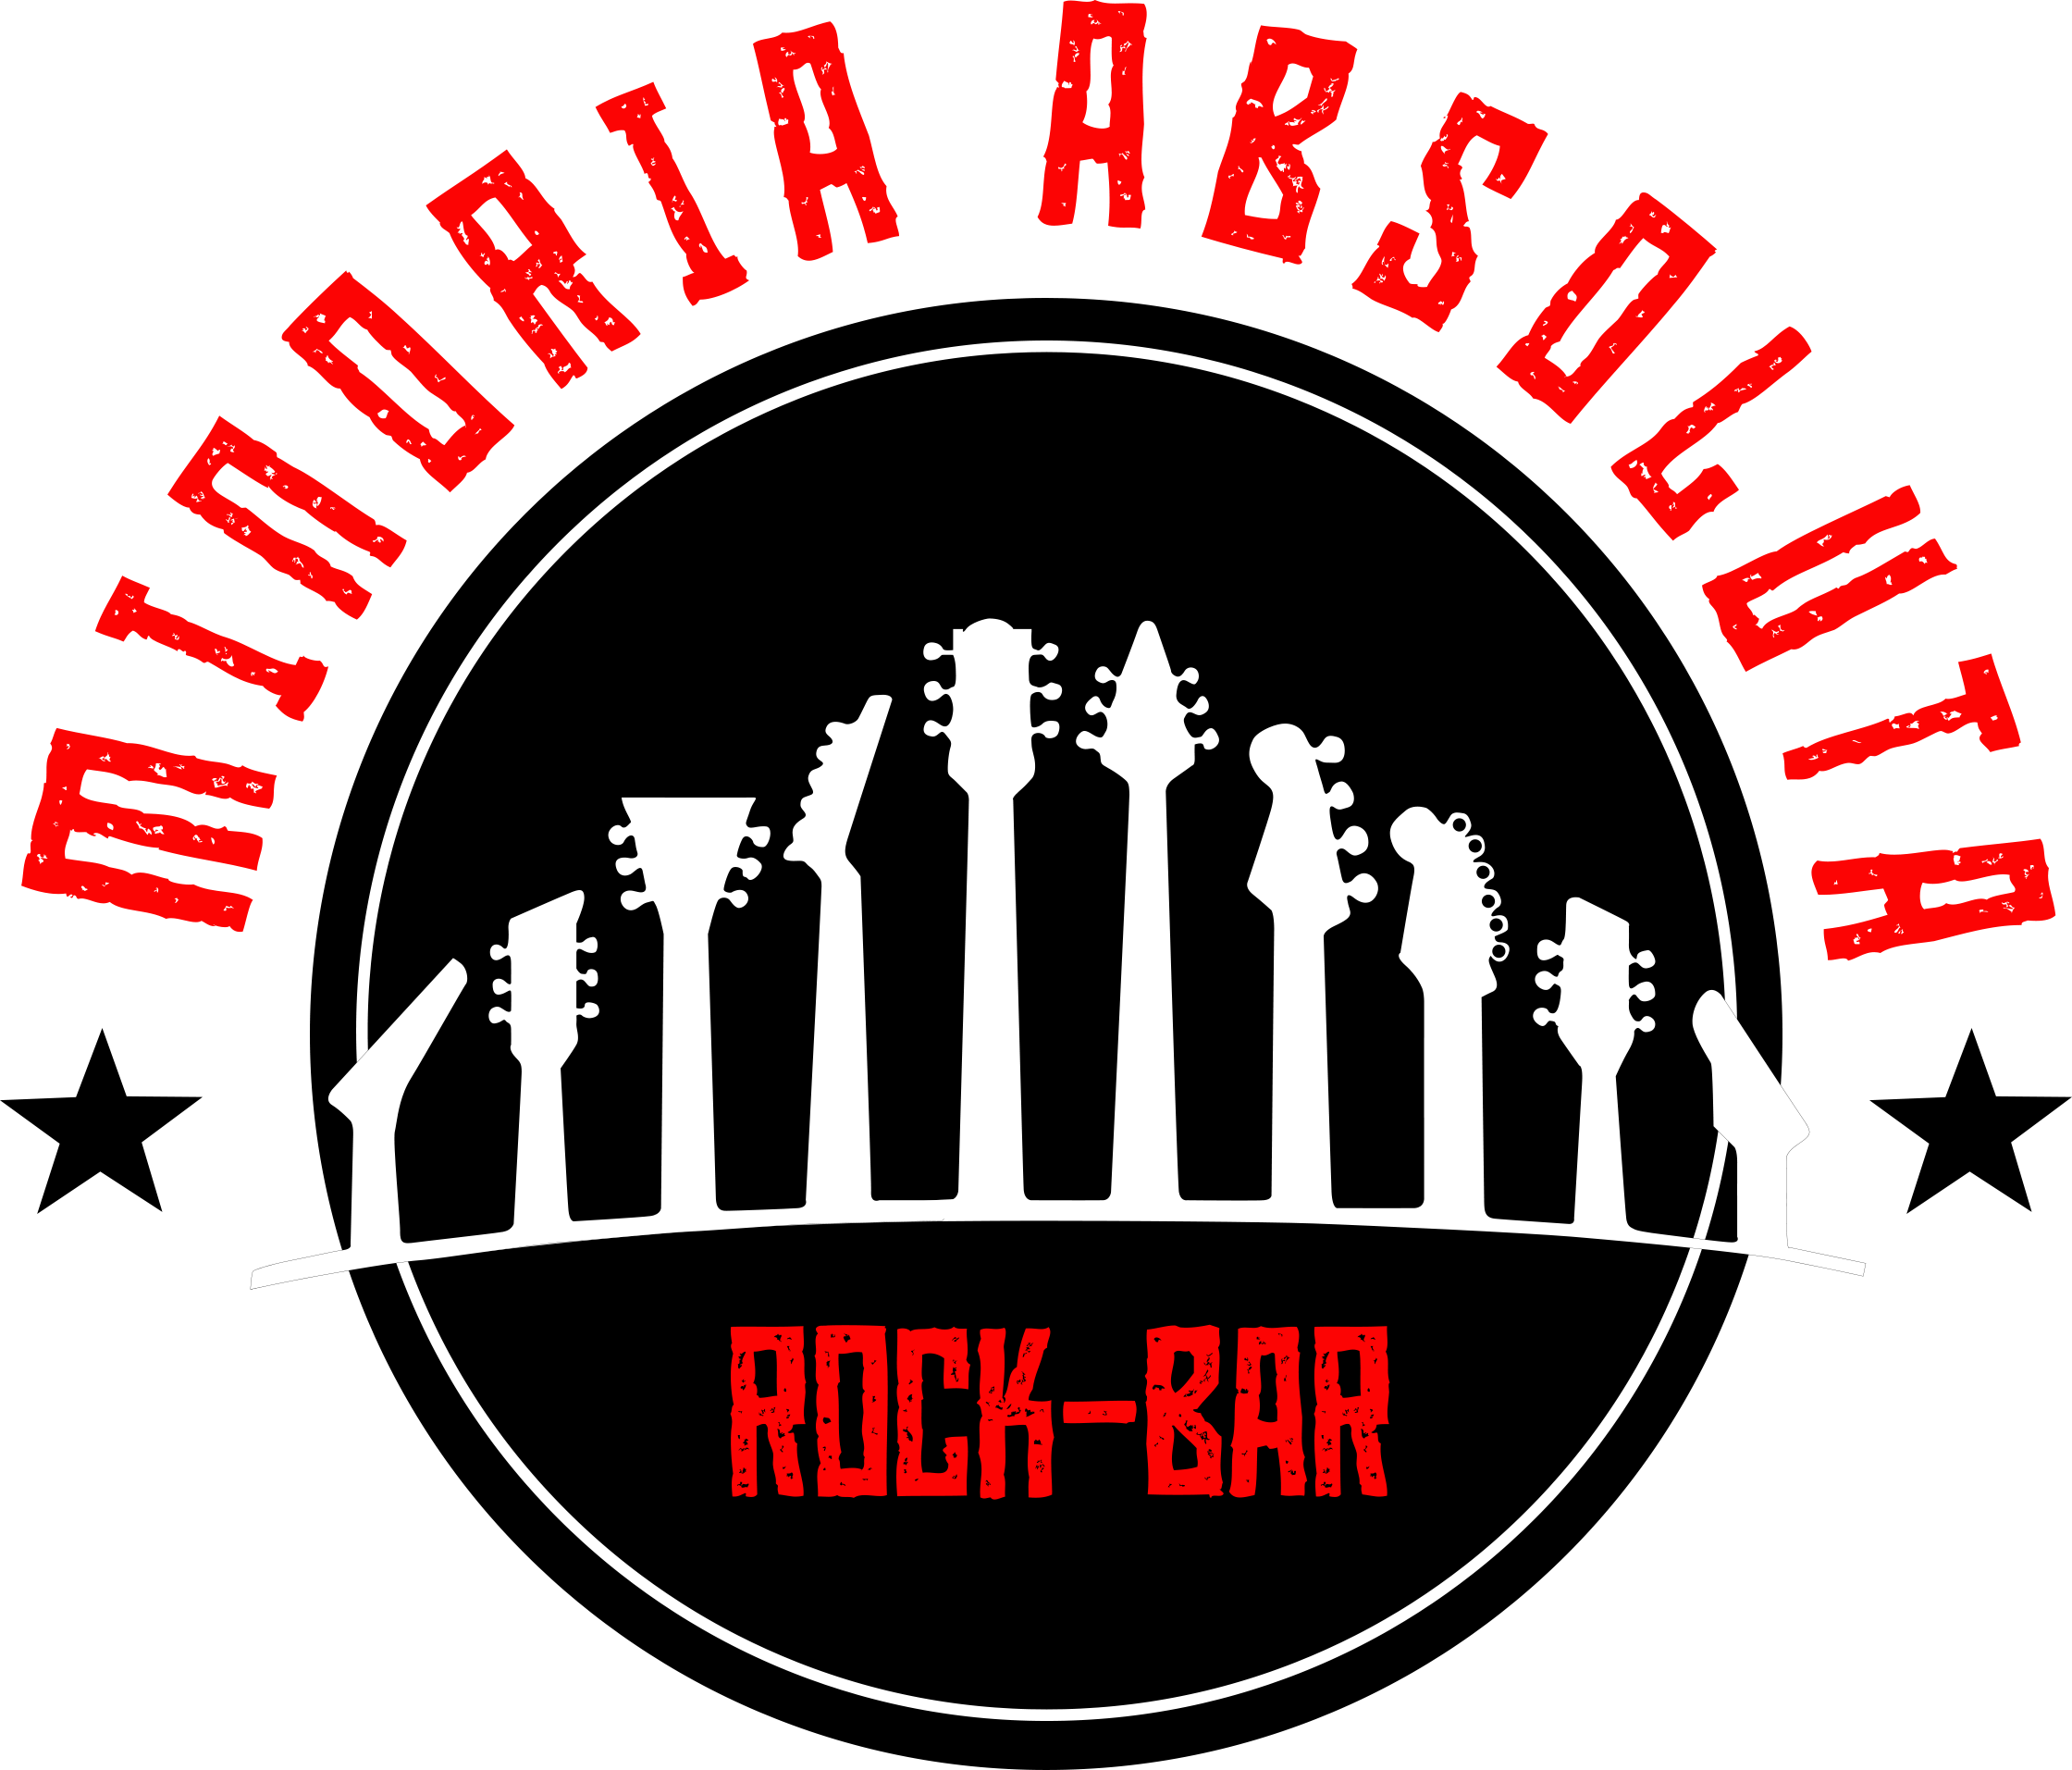 MINORIA ABSOLUTA ROCK-BAR